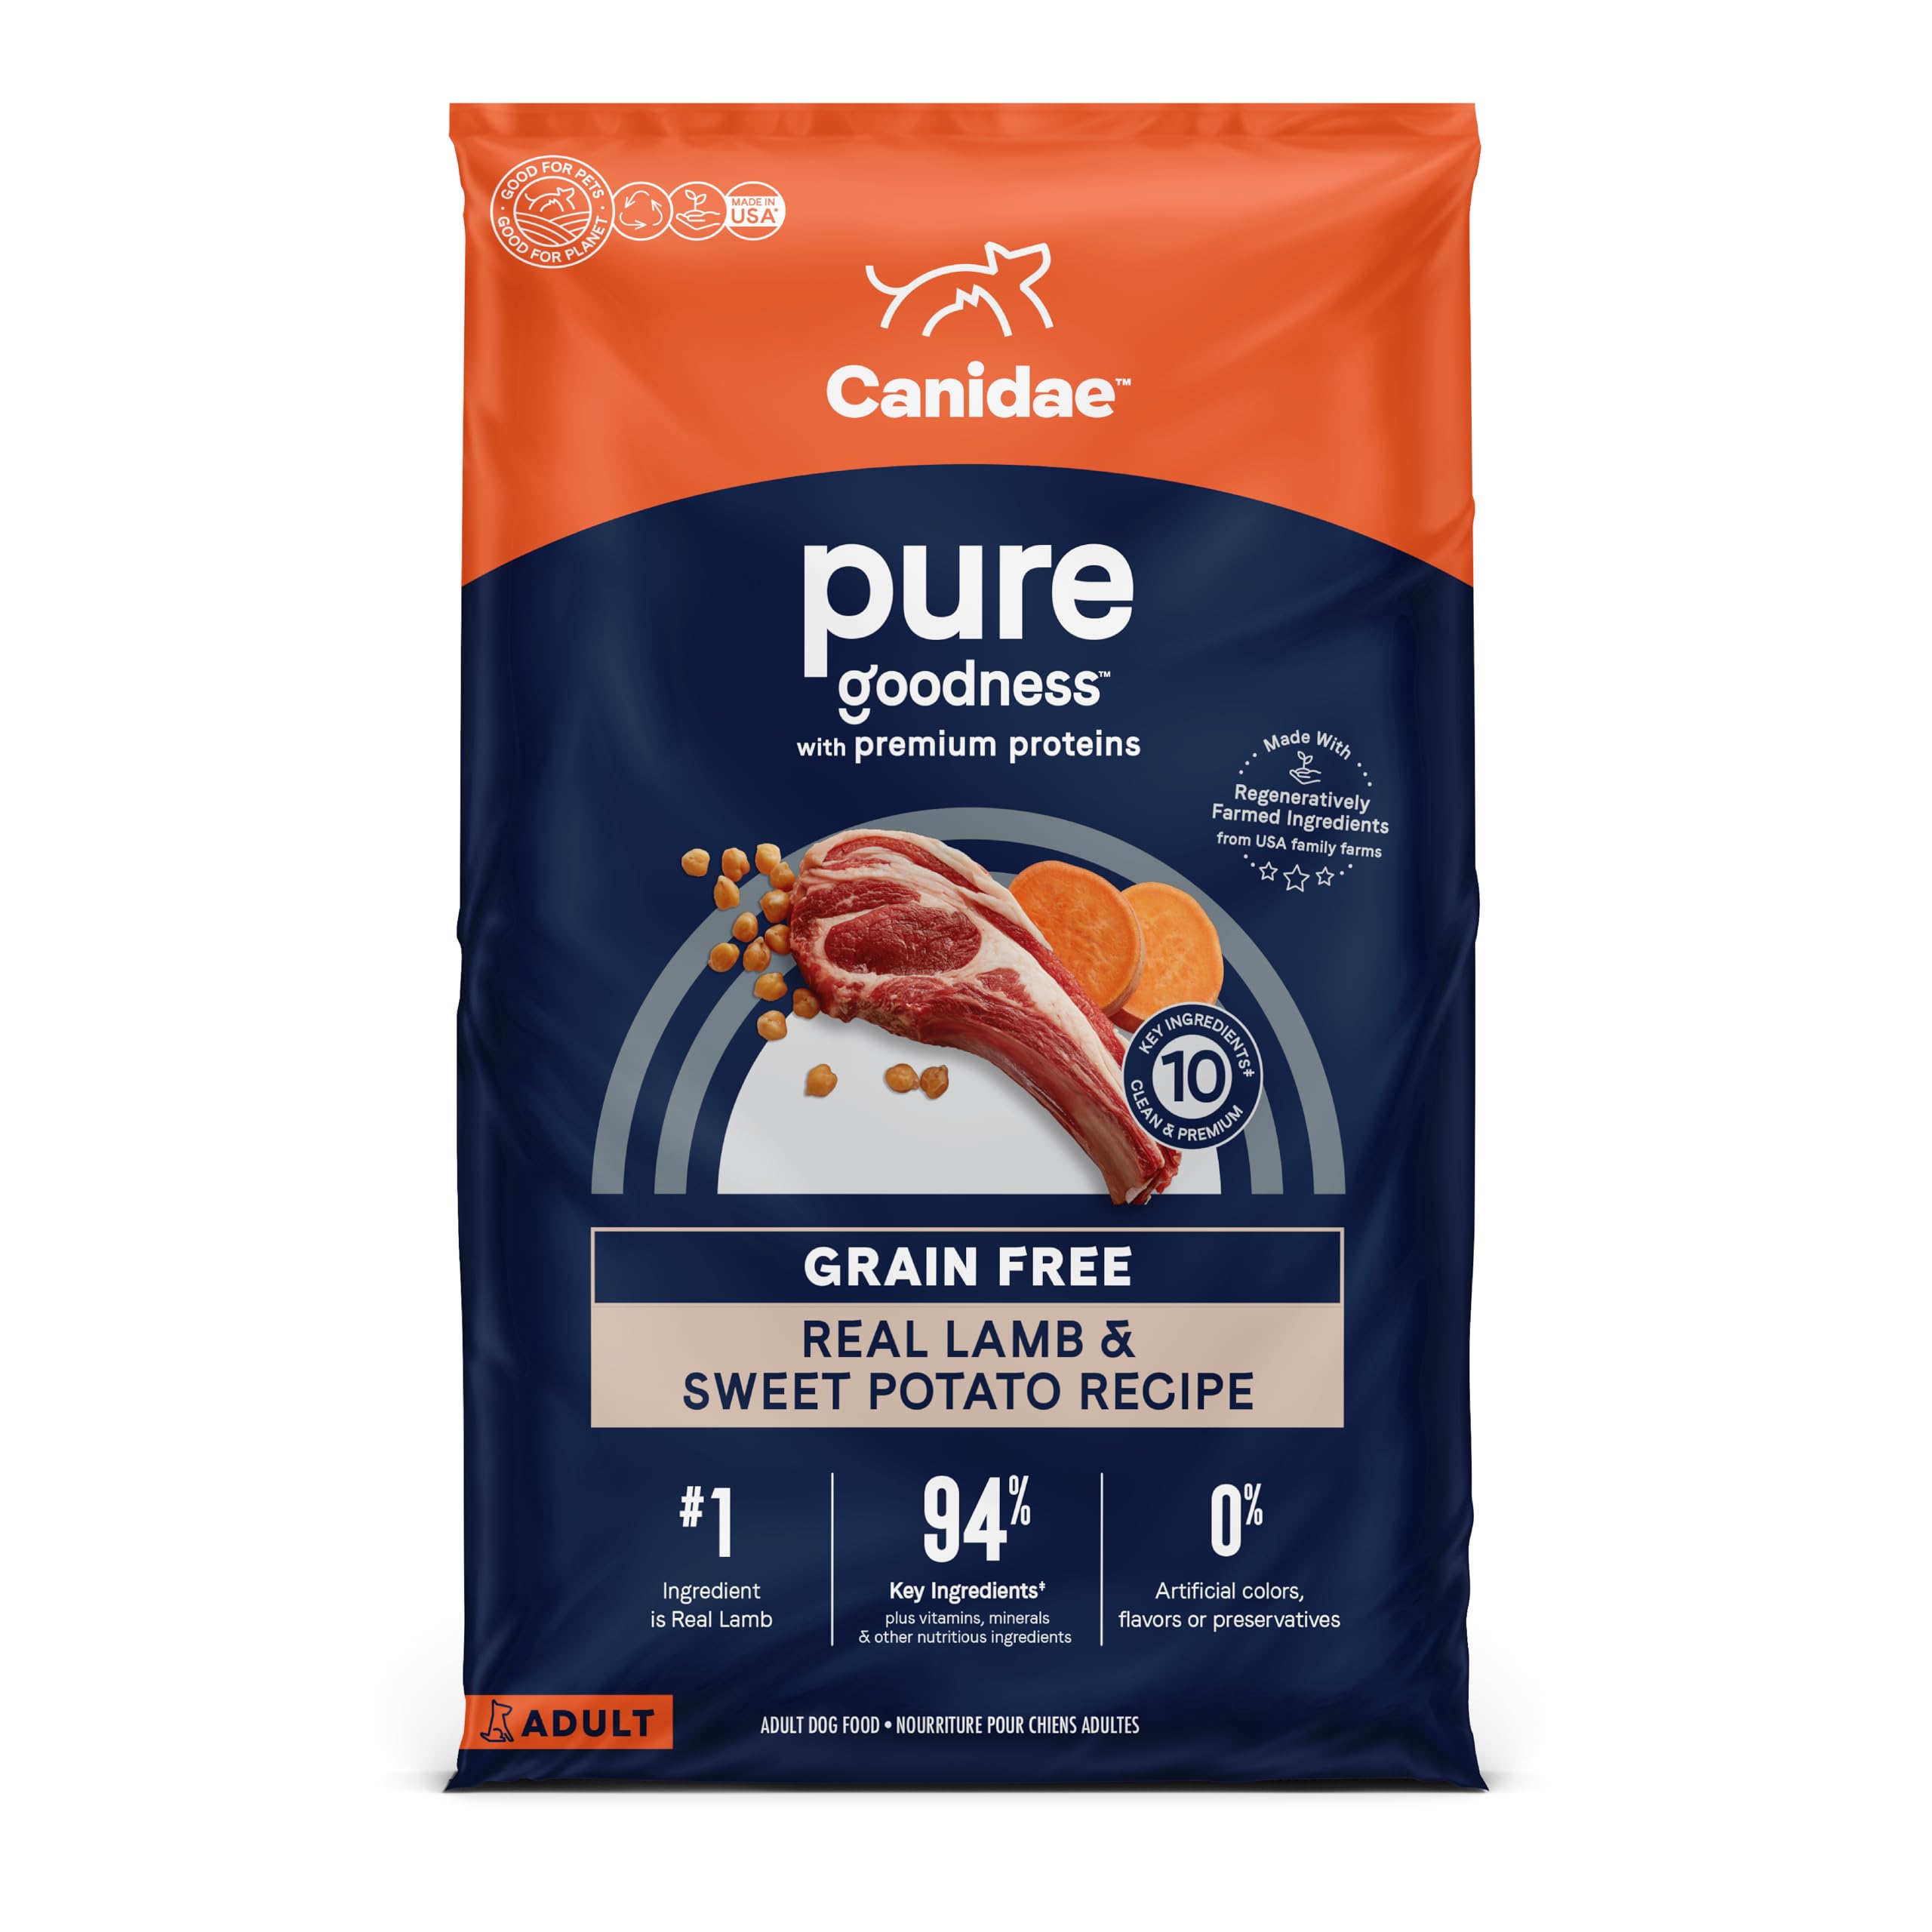 Canidae Pure 有限成分优质成人干狗粮，真正的羊肉和甘薯配方，22 磅，无谷物...